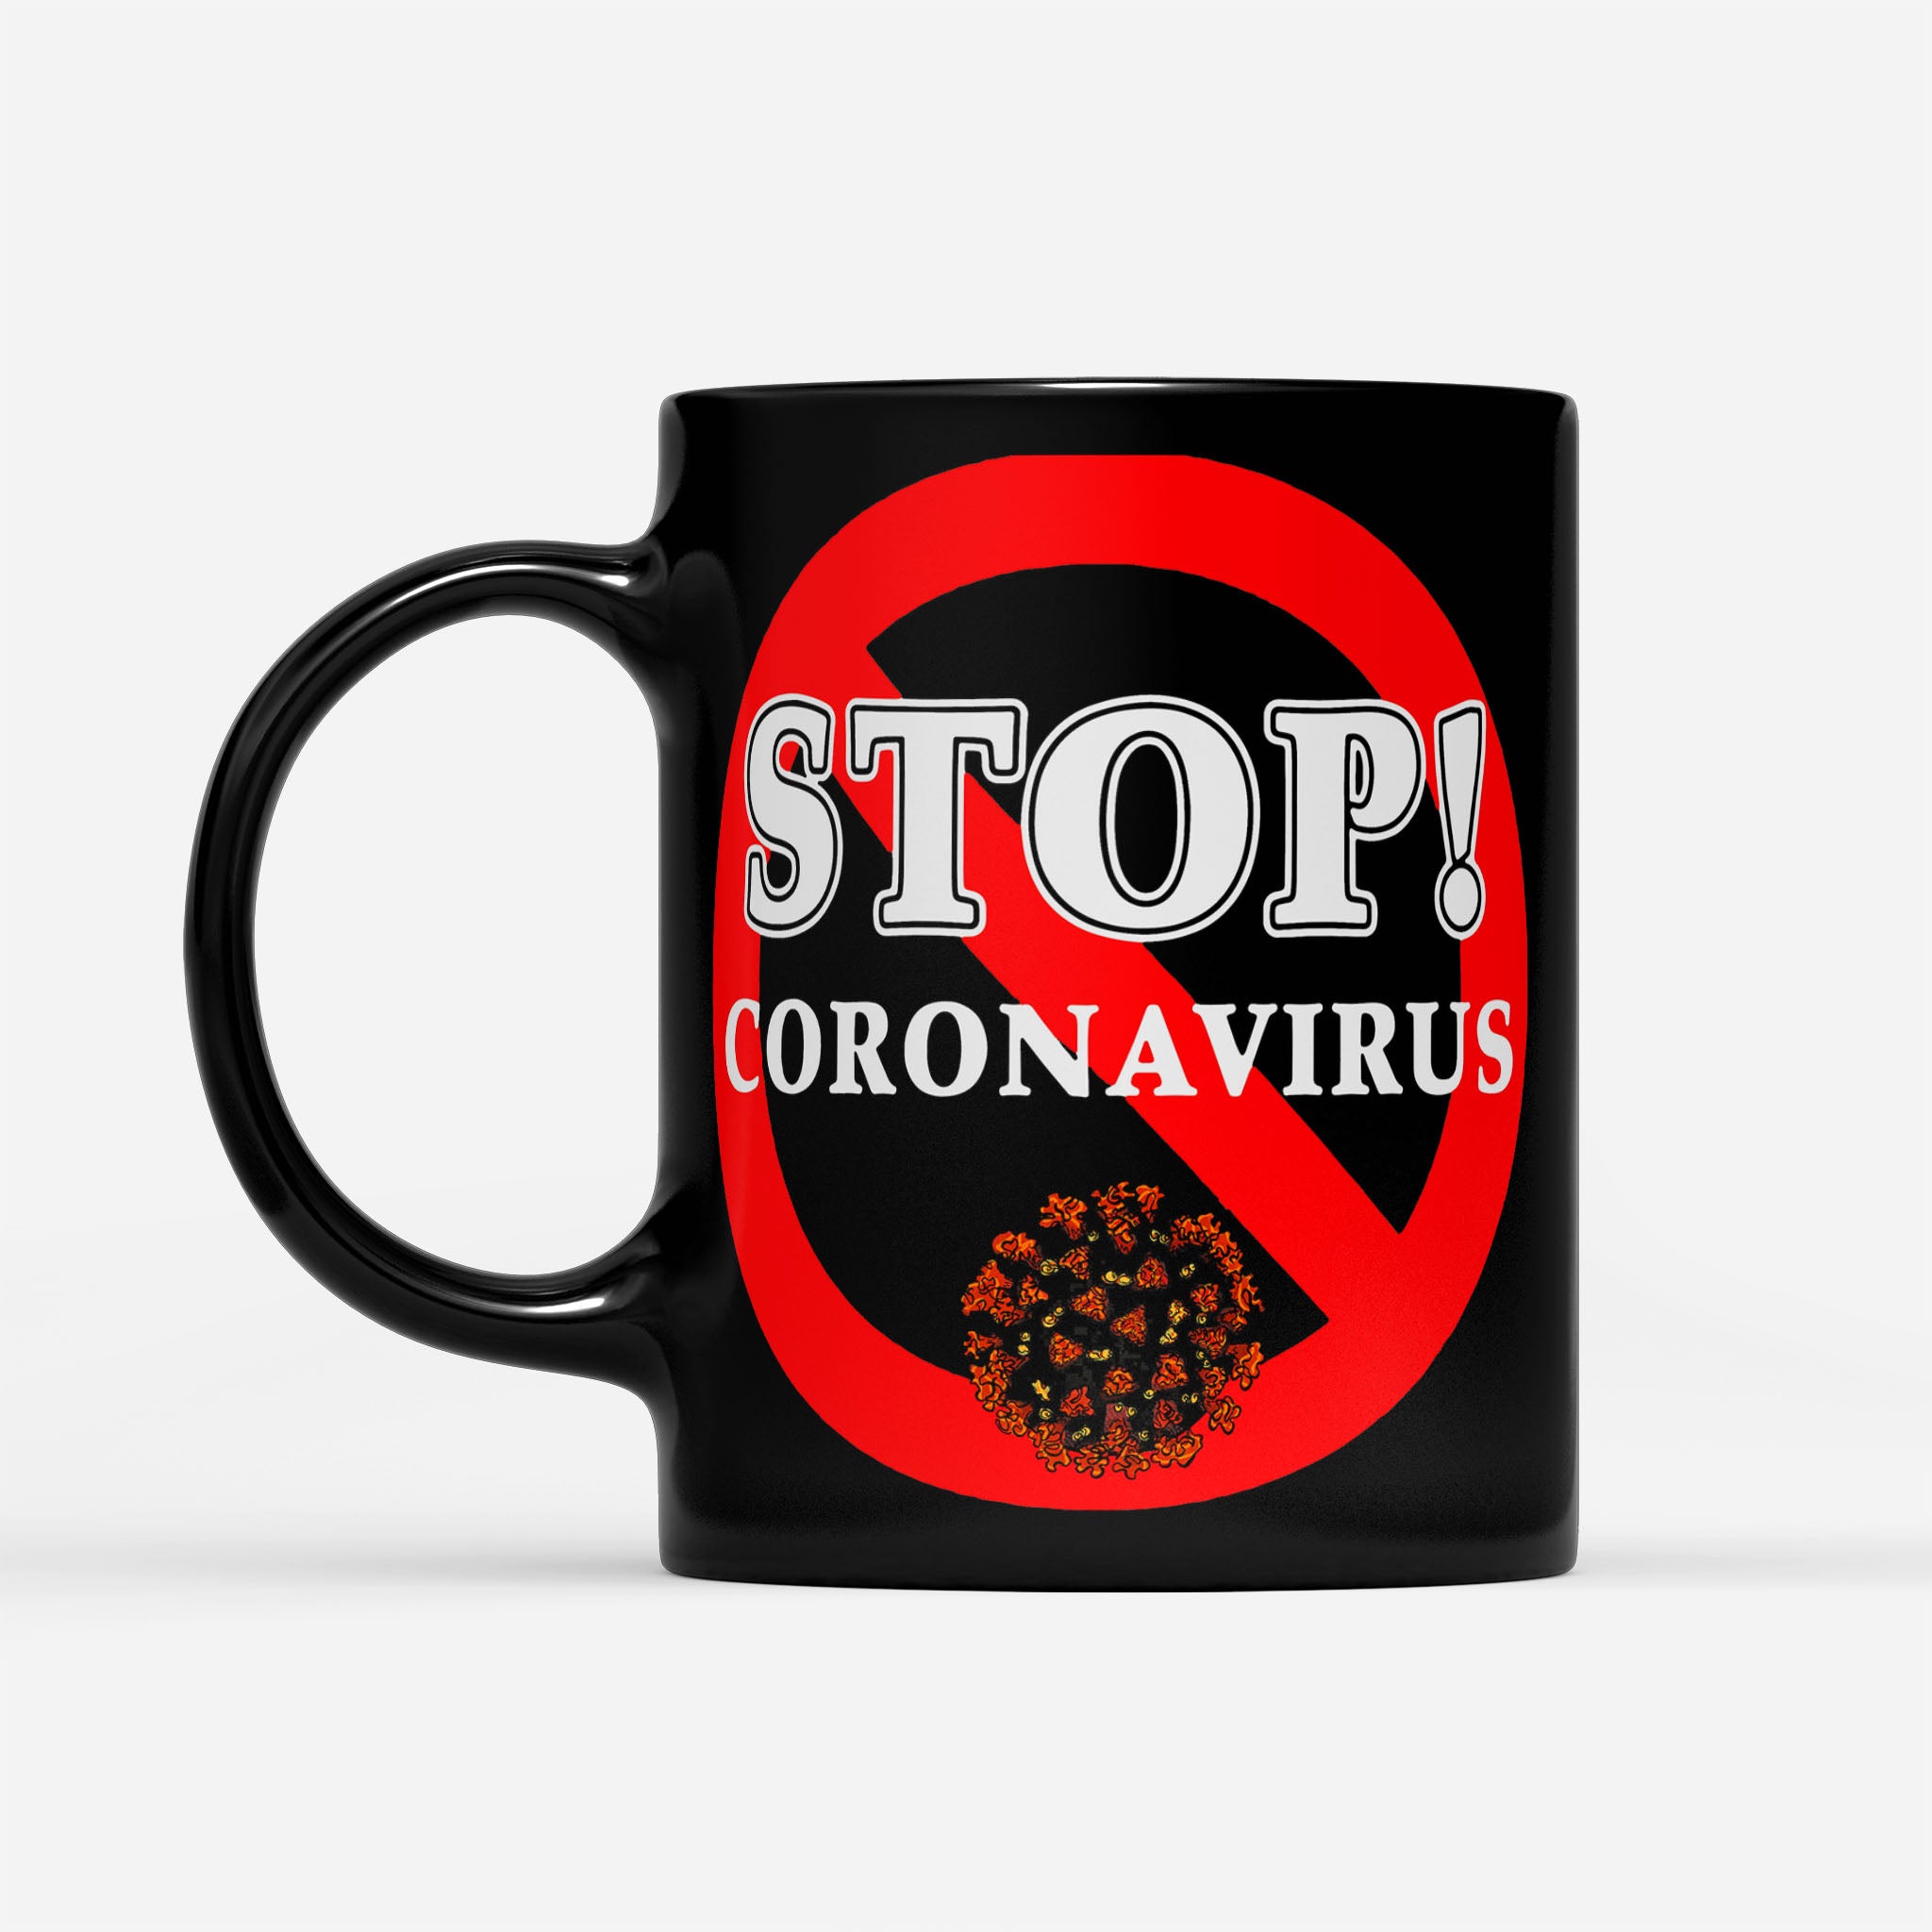 Stop Coronavirus - Black Mug